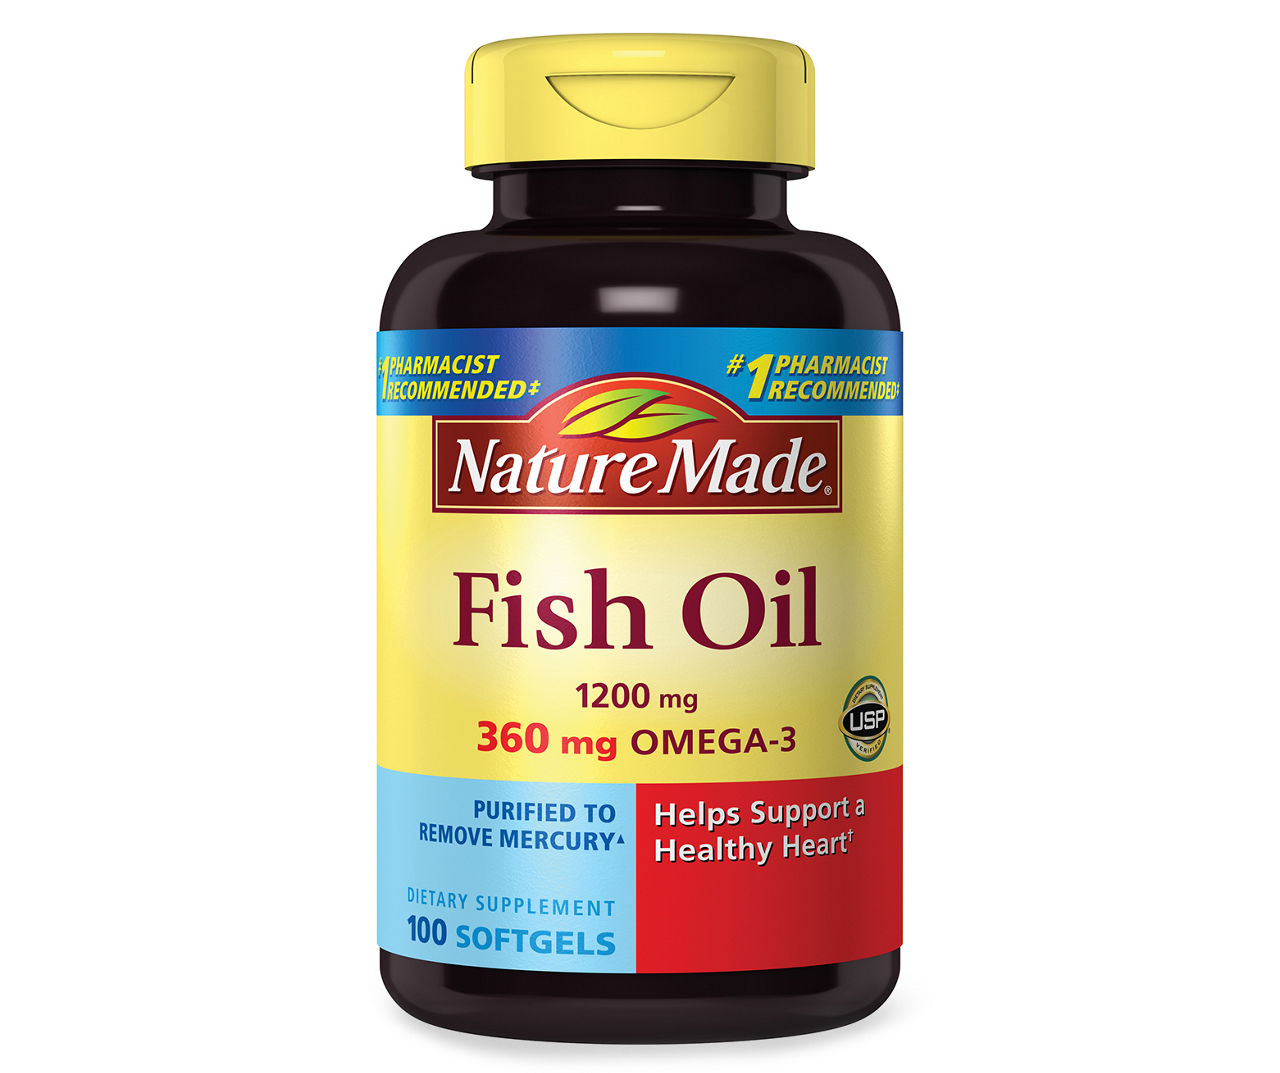 Omega 3 1200mg. Омега-3 1200 мг. Nature made Fish Oil 1200mg. Little Омега 3 1000 мг.